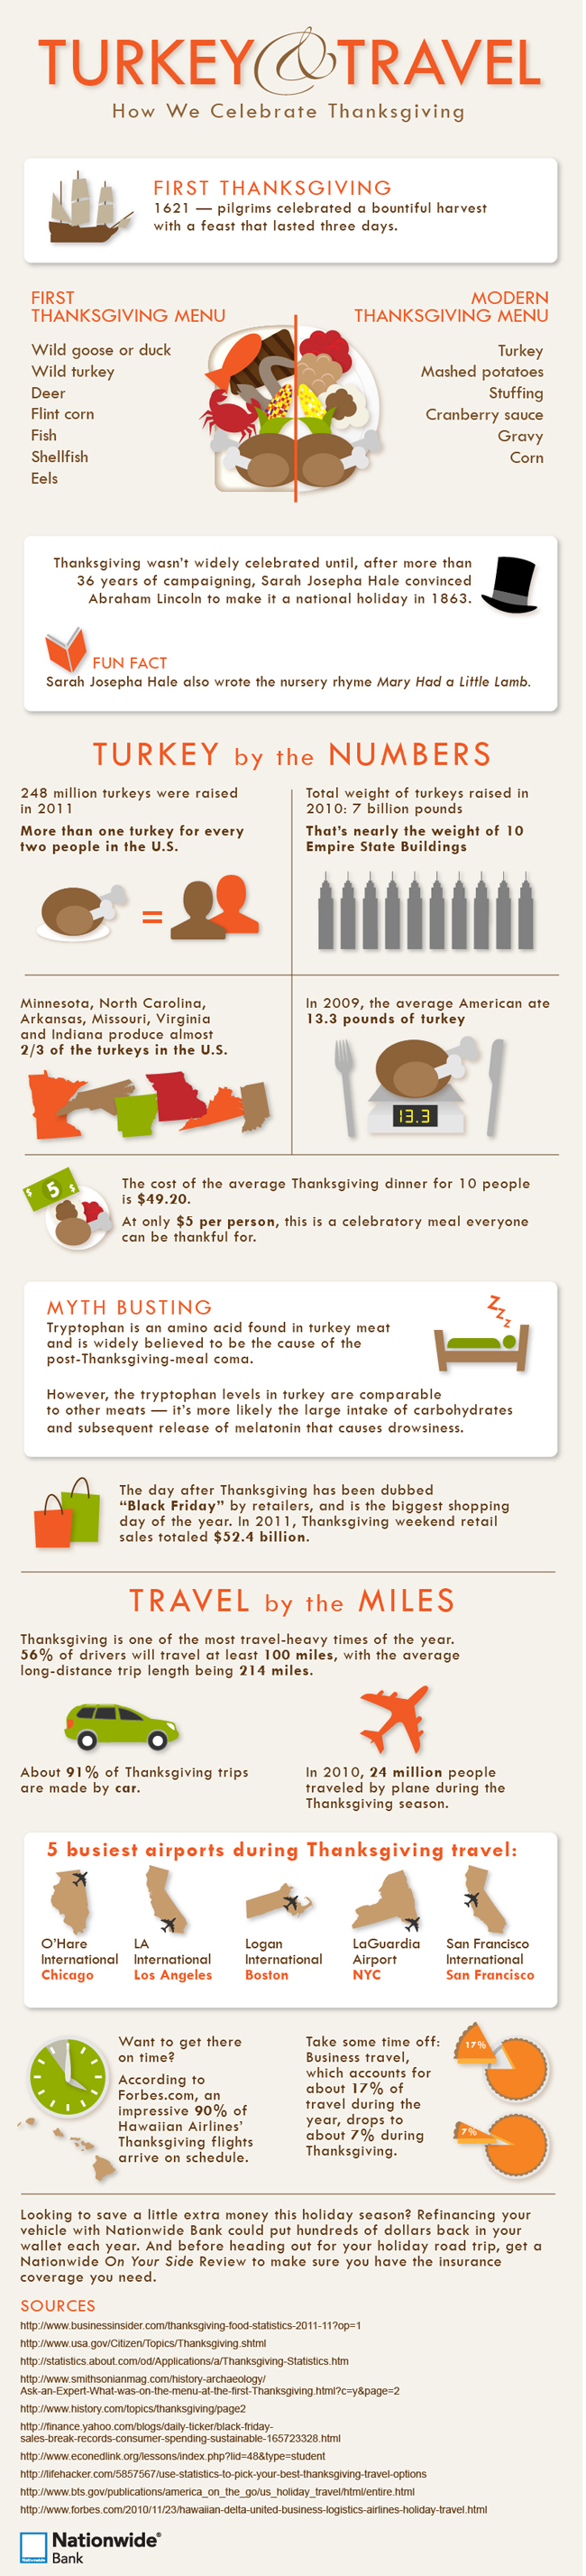 Infographic - Celebrating Thanksgiving